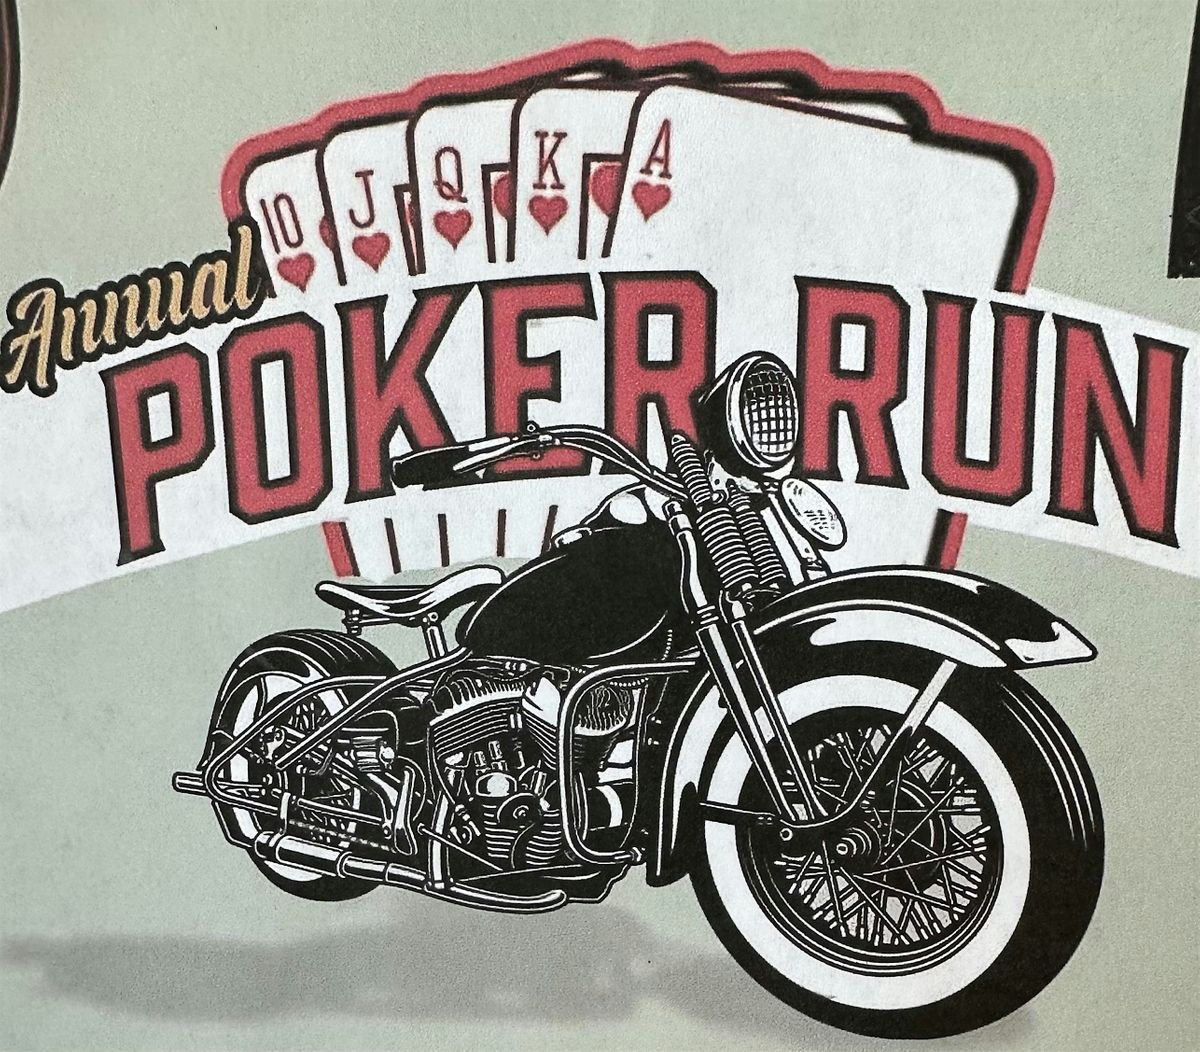 The Western Foundation Annual Poker Run & Car Show